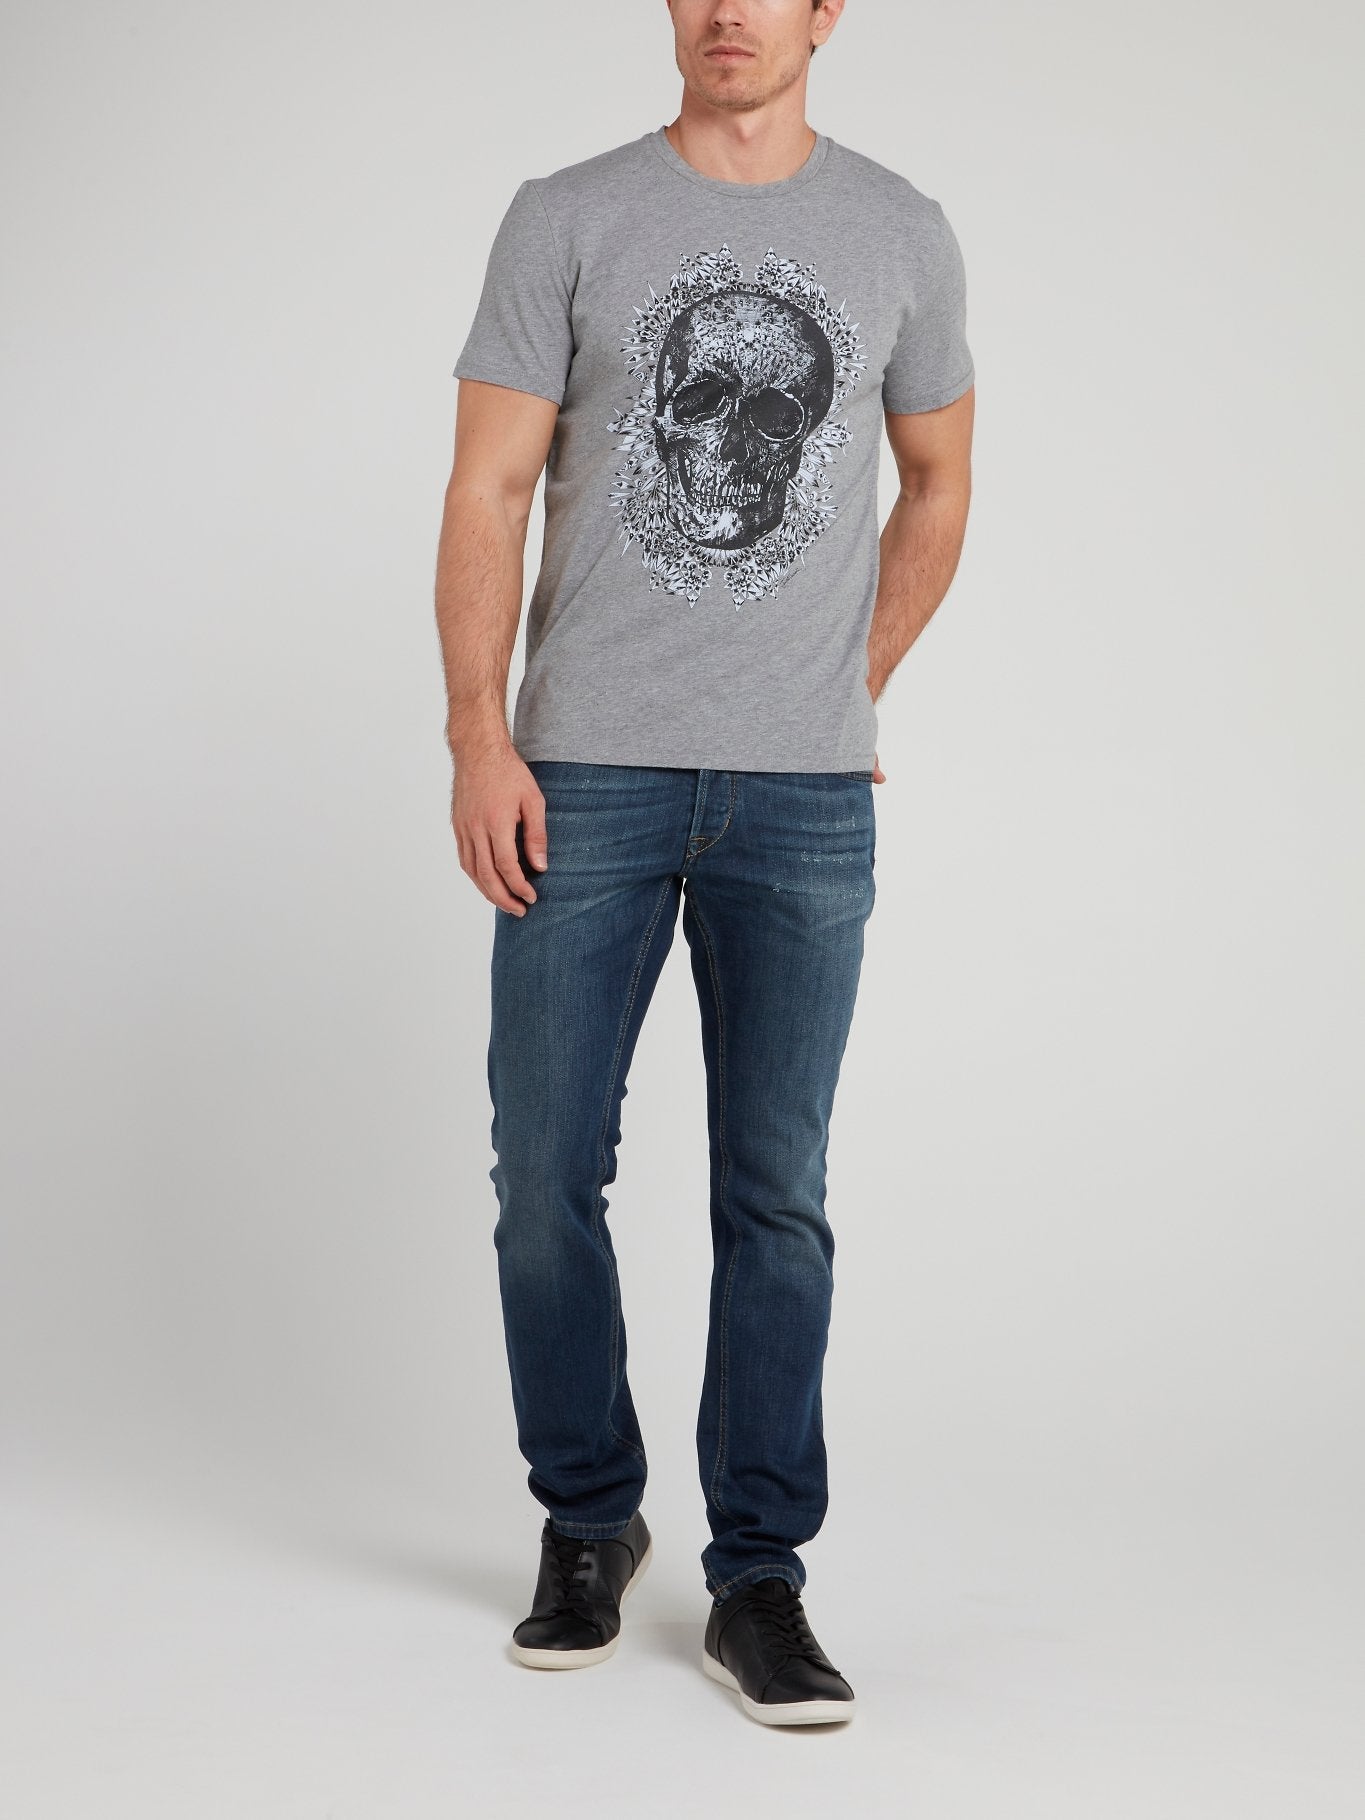 Grey Skull Print T-Shirt